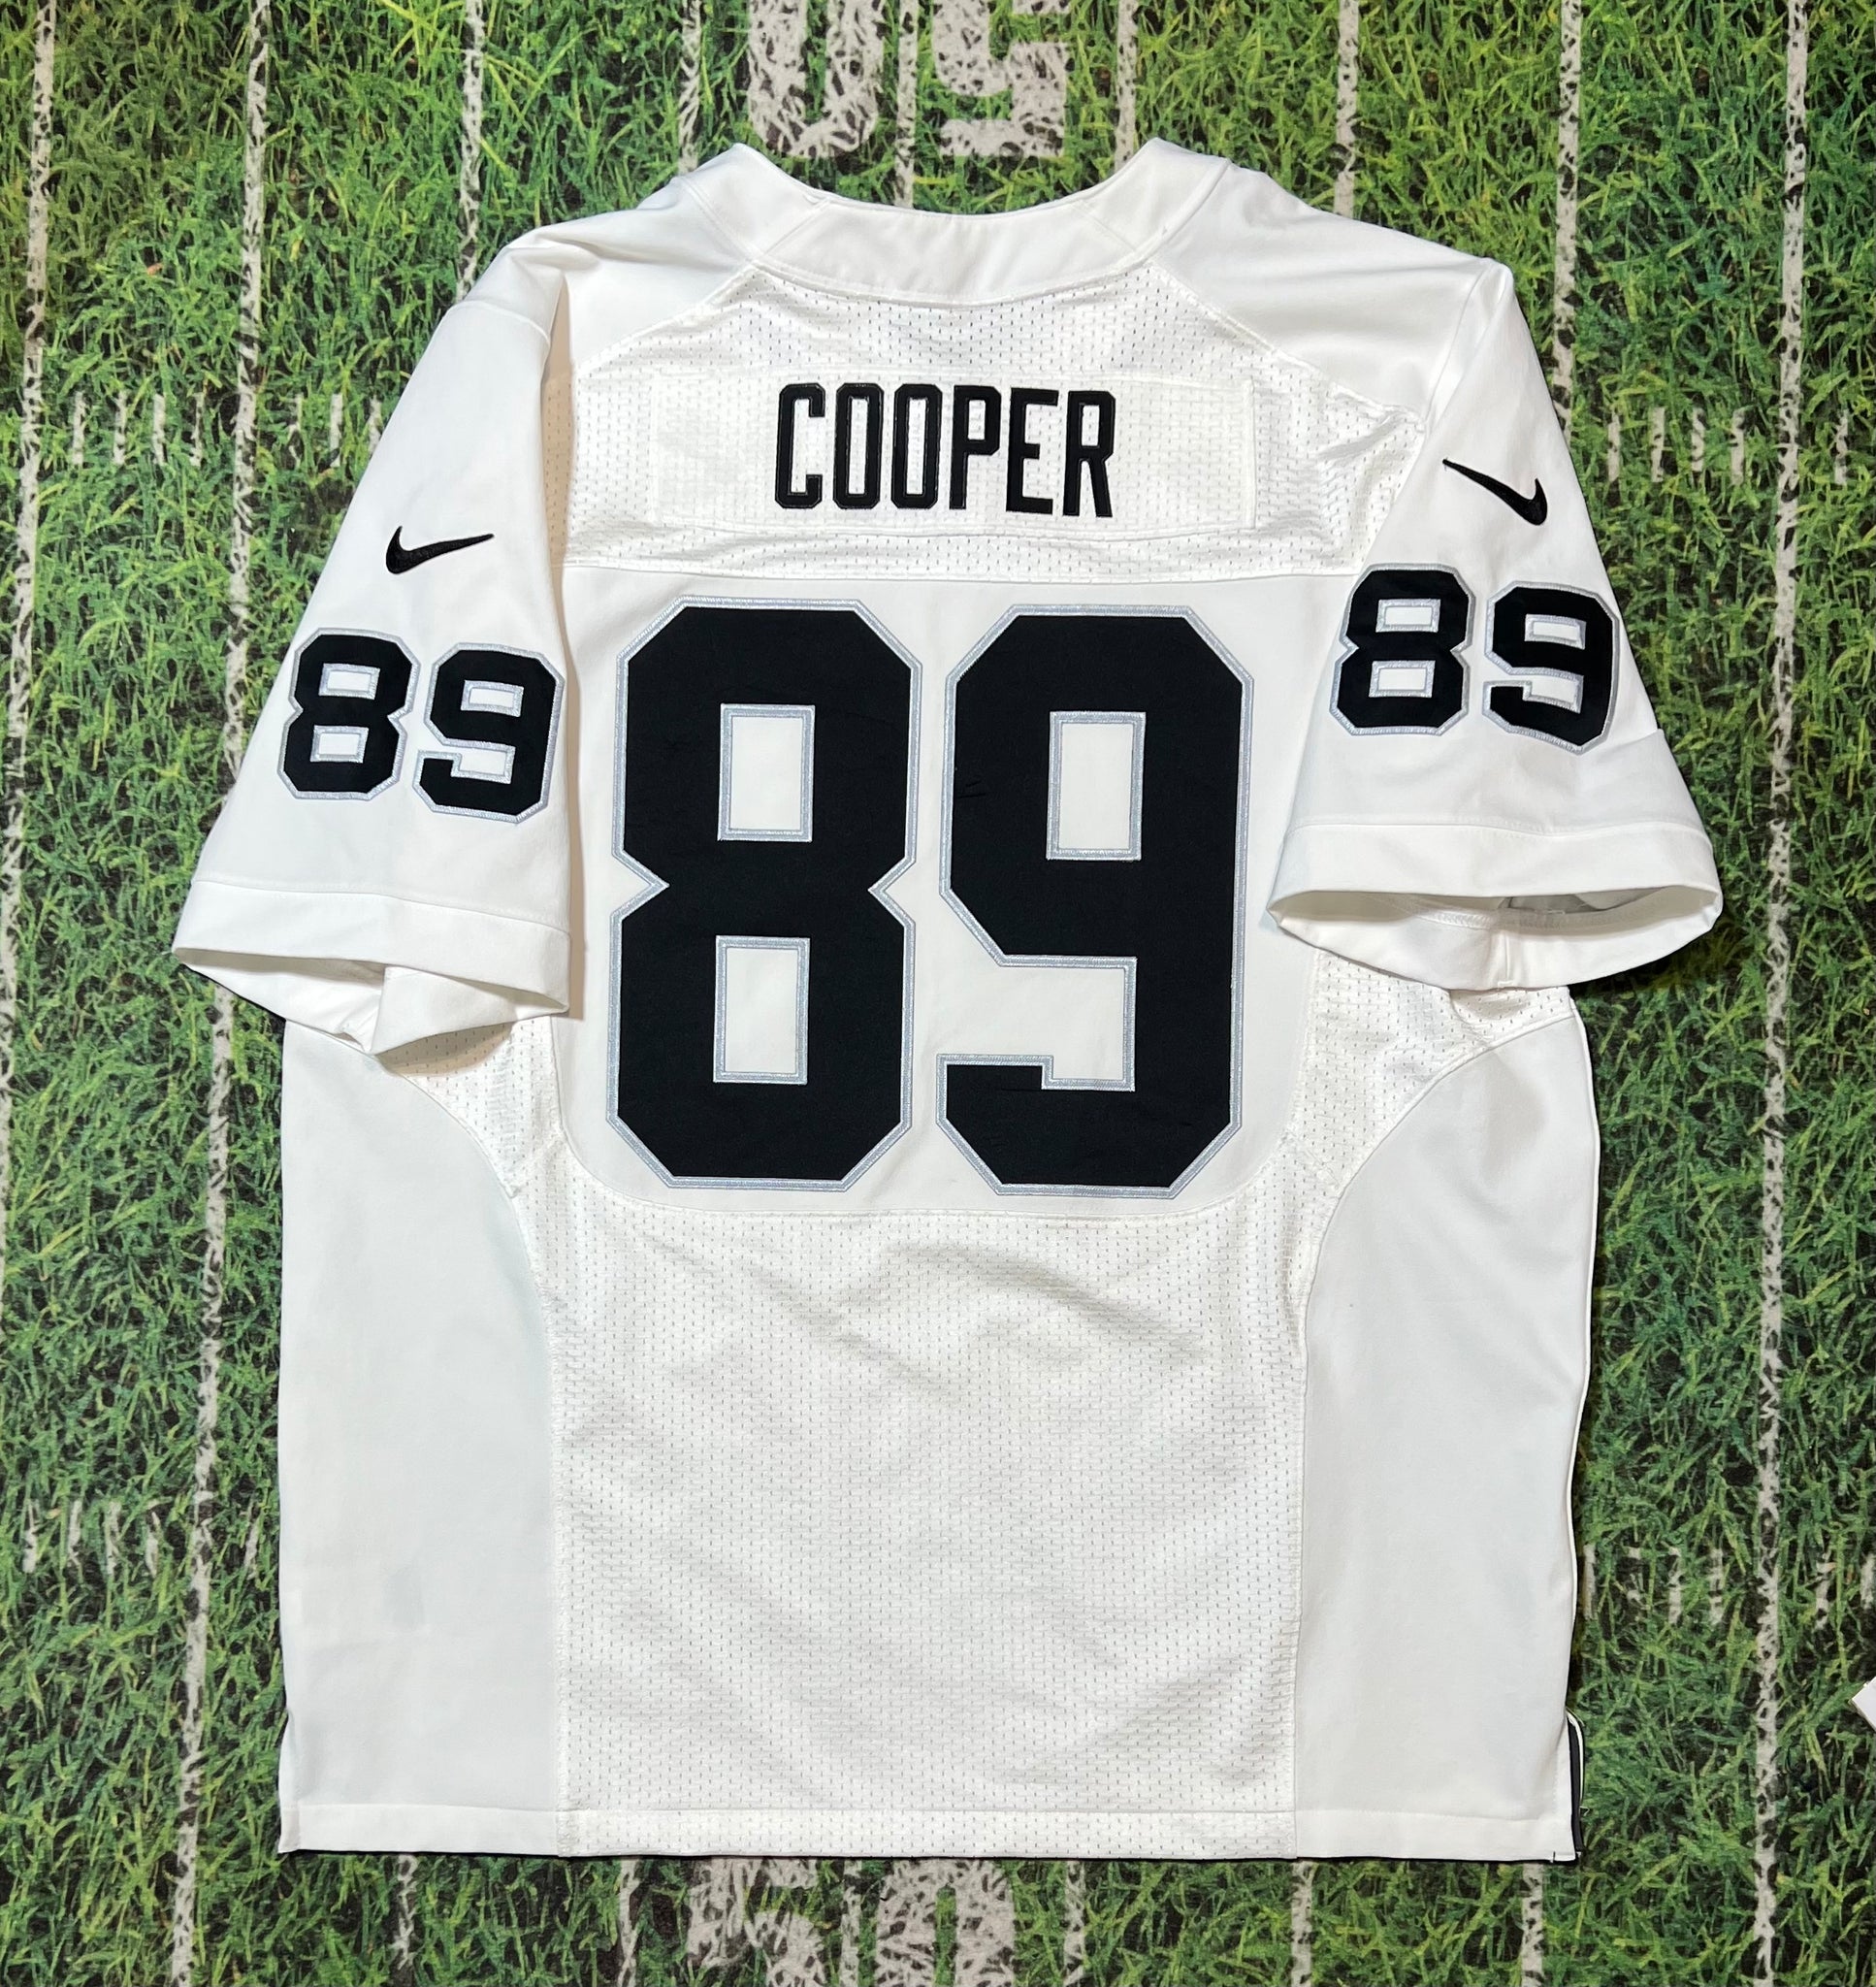 Amari Cooper #89 Oakland Raiders Las Vegas Jersey Nike Football